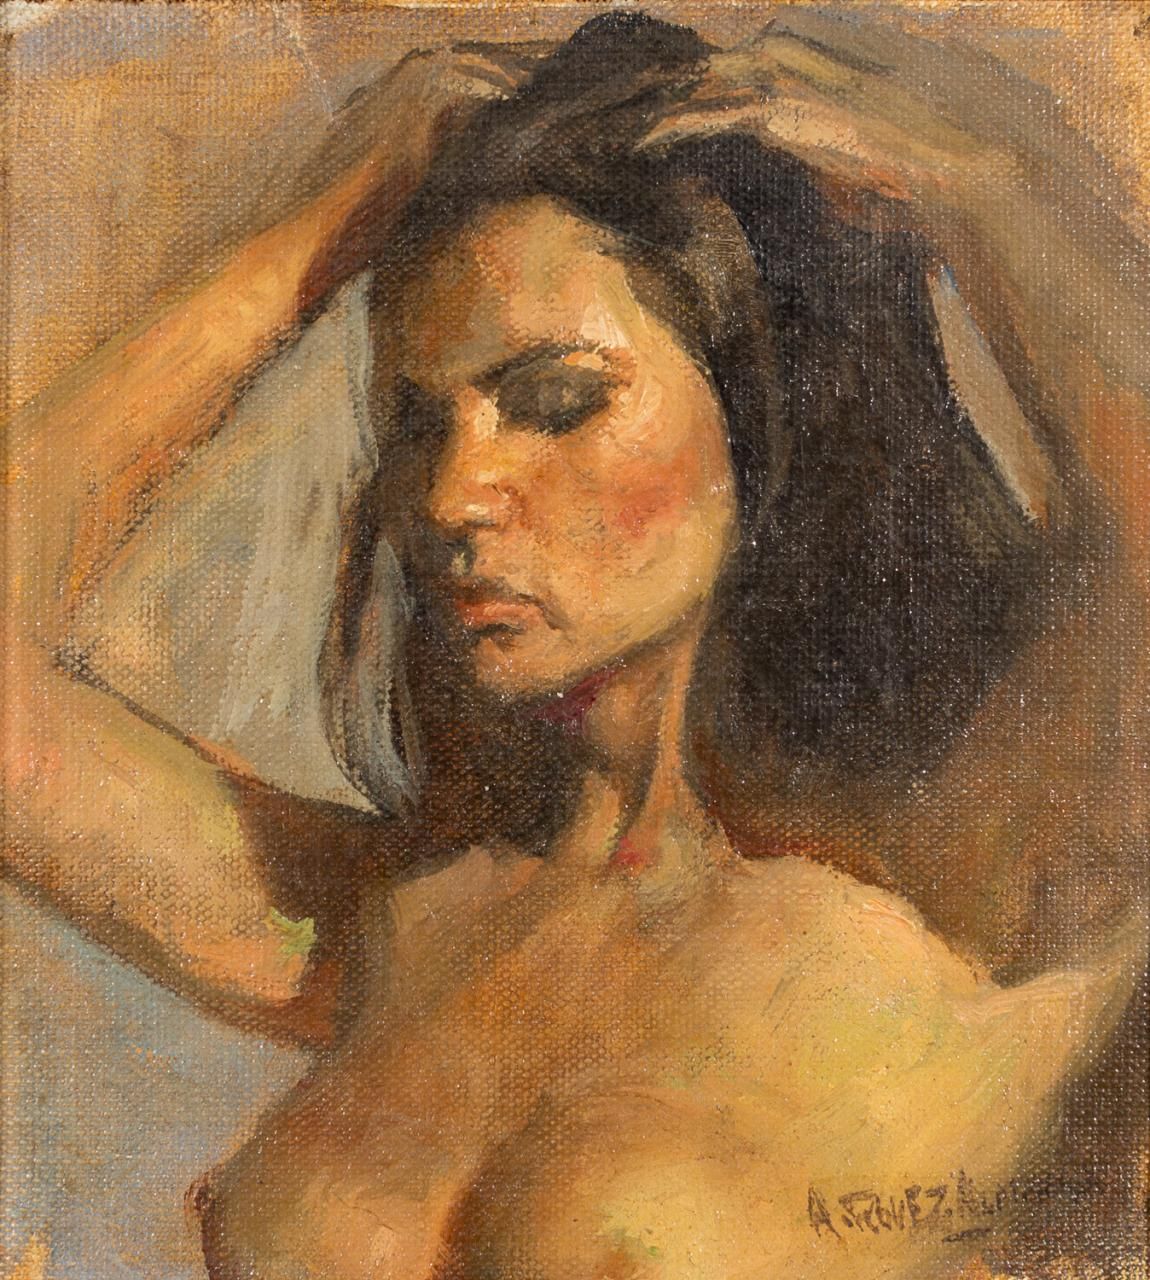 ANTONIO RODRÍGUEZ-ALMANSA 女性裸体
布面油画
20 x 19 cm
右下角有签名："Rguez-Almansa" 。